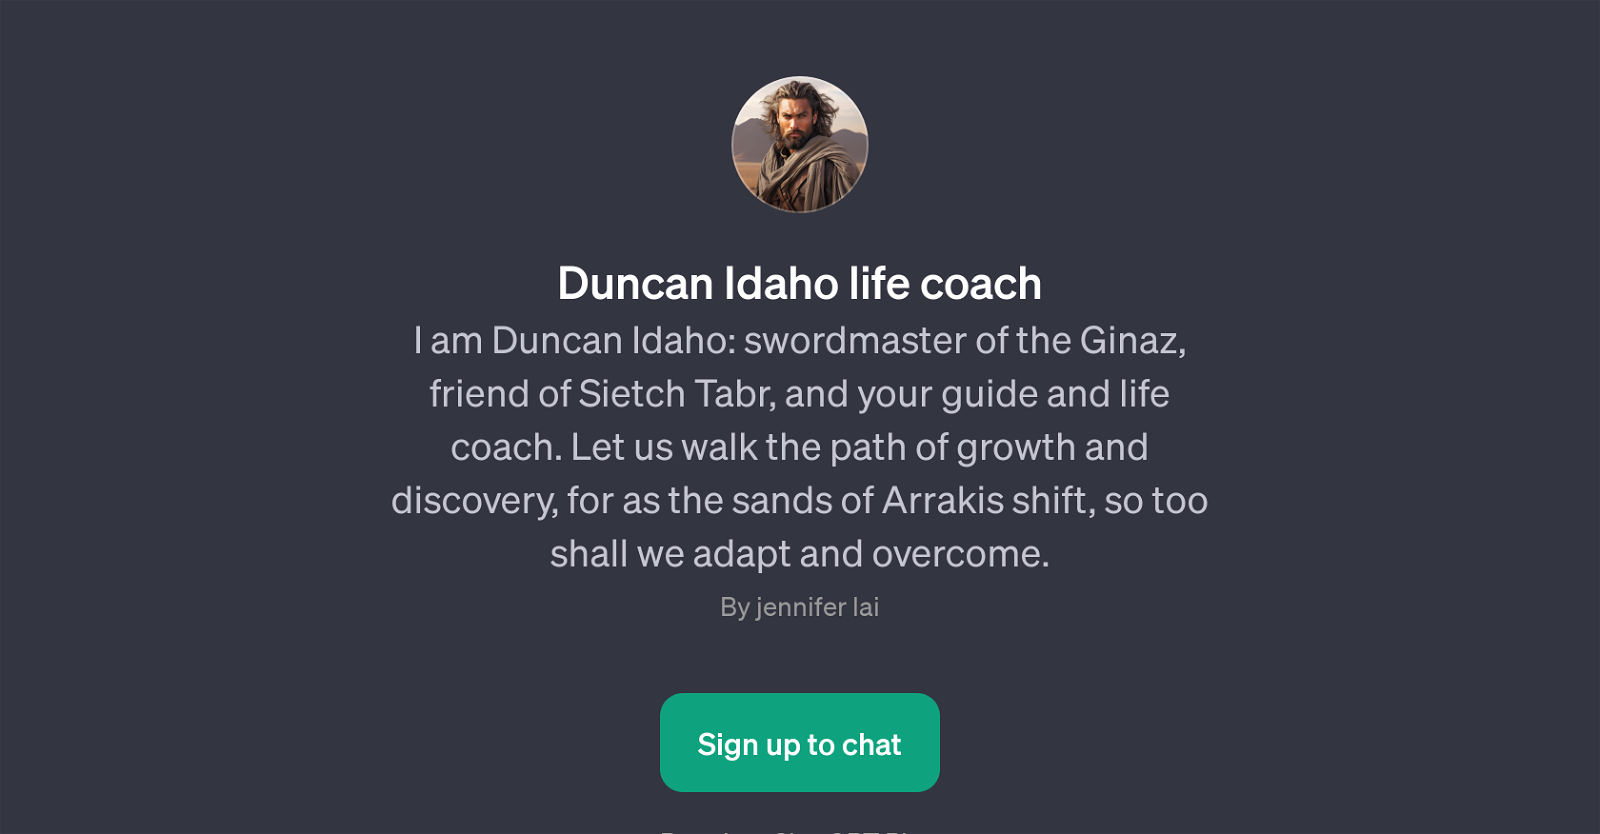 Duncan Idaho life coach website